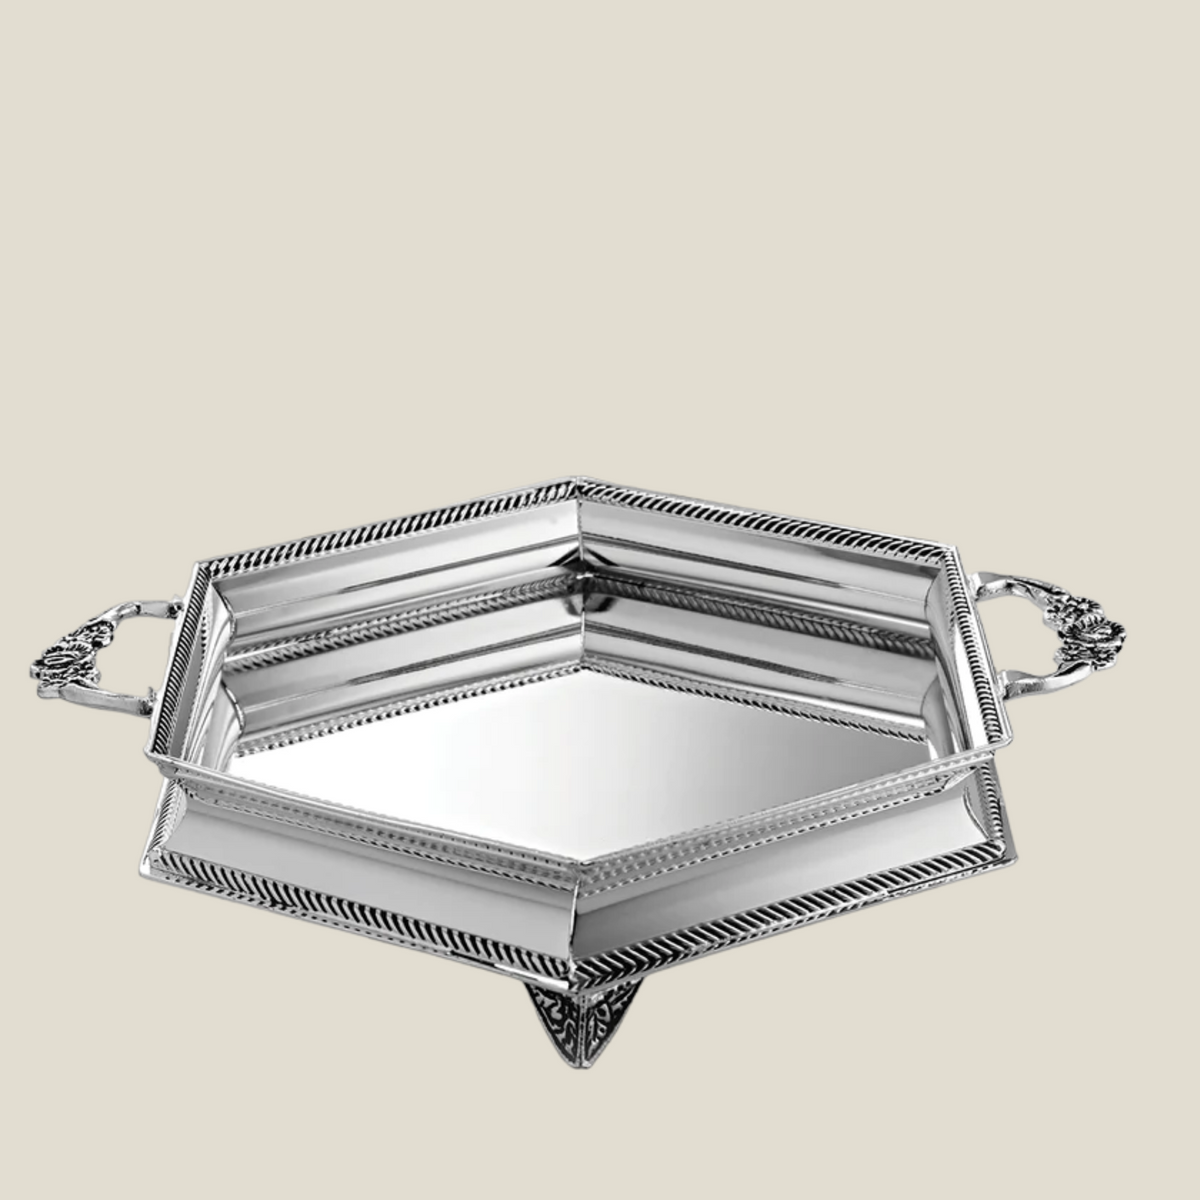 Hexagonal Tray with Handle & Feet - Silver